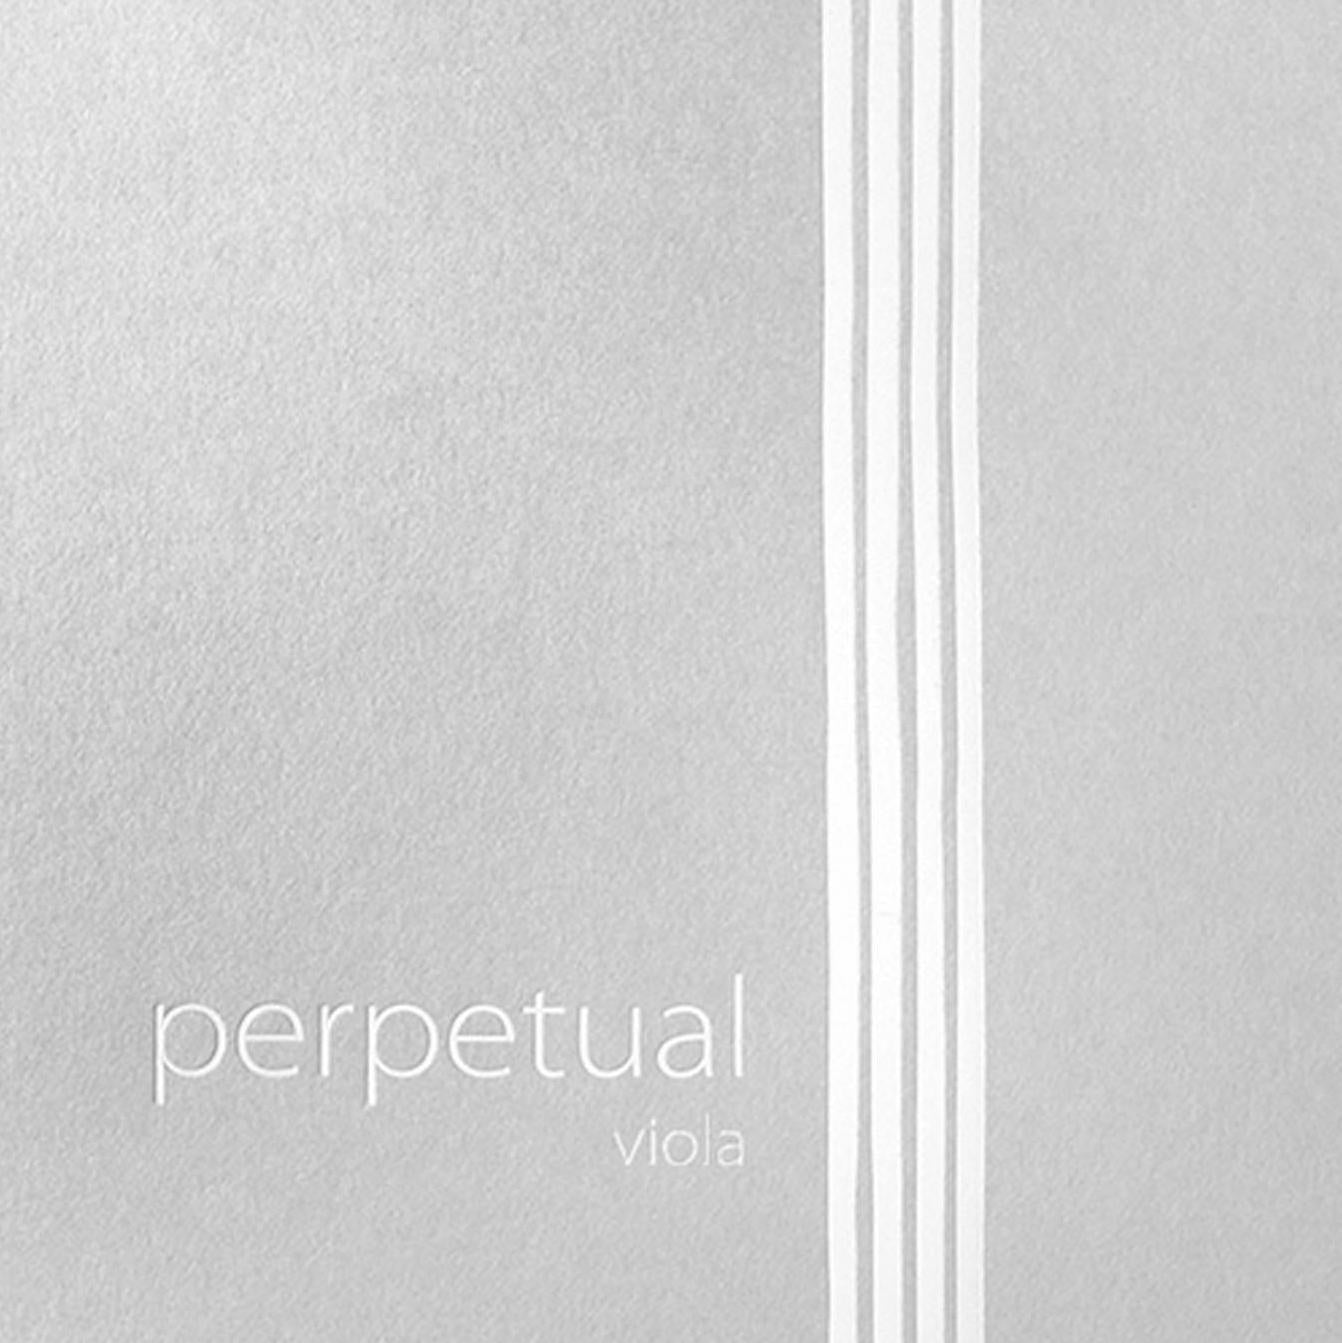 Pirastro - Perpetual | Viola